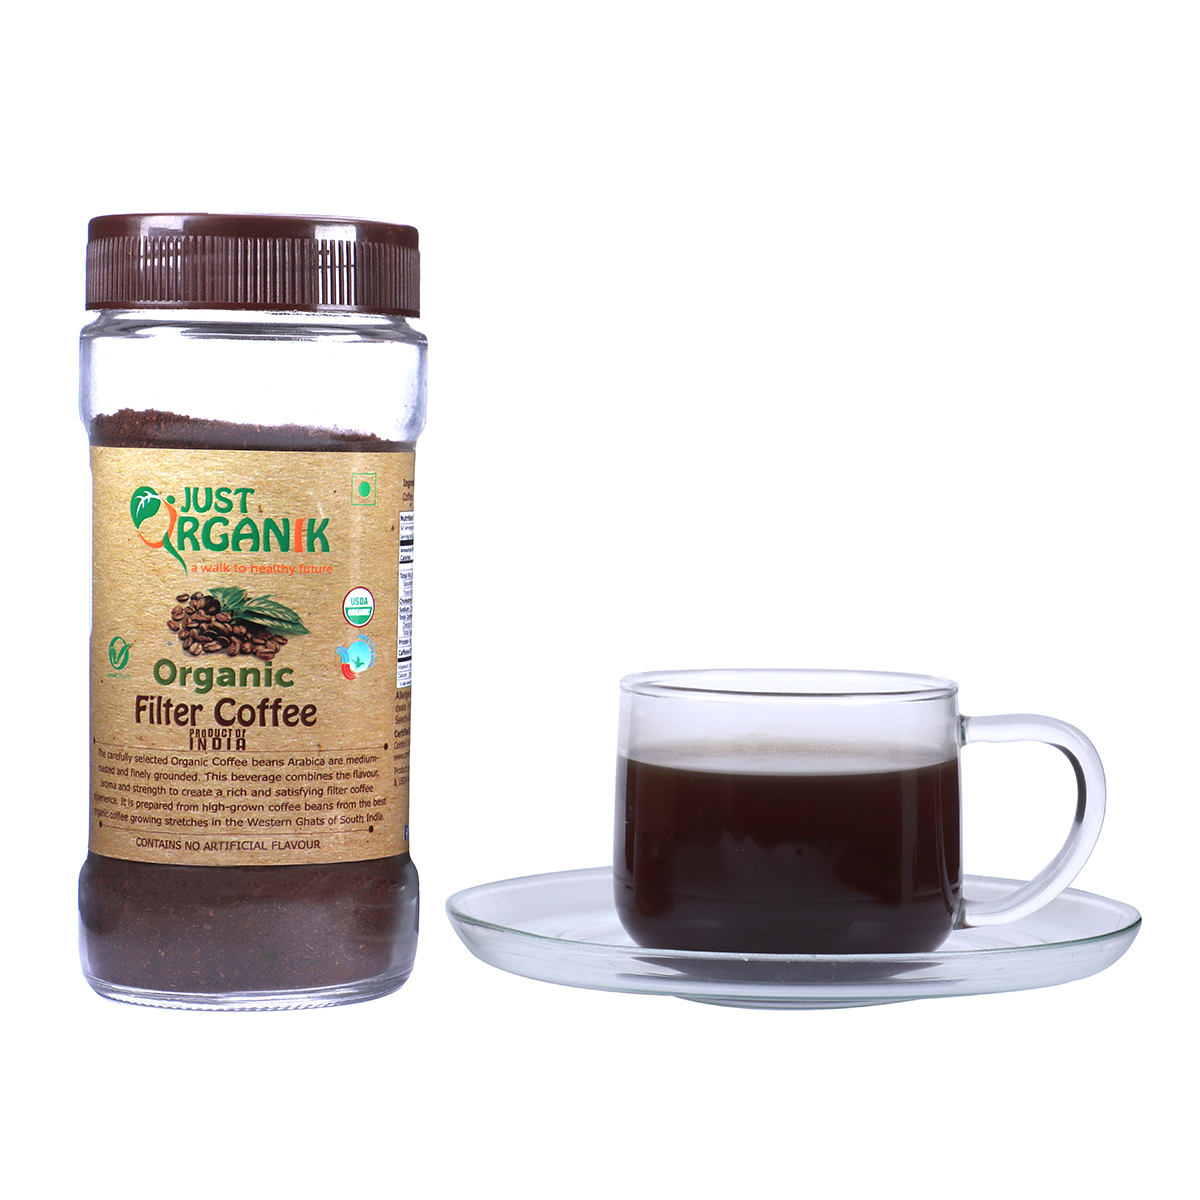 Just Organik Organic Filter Coffee 100g